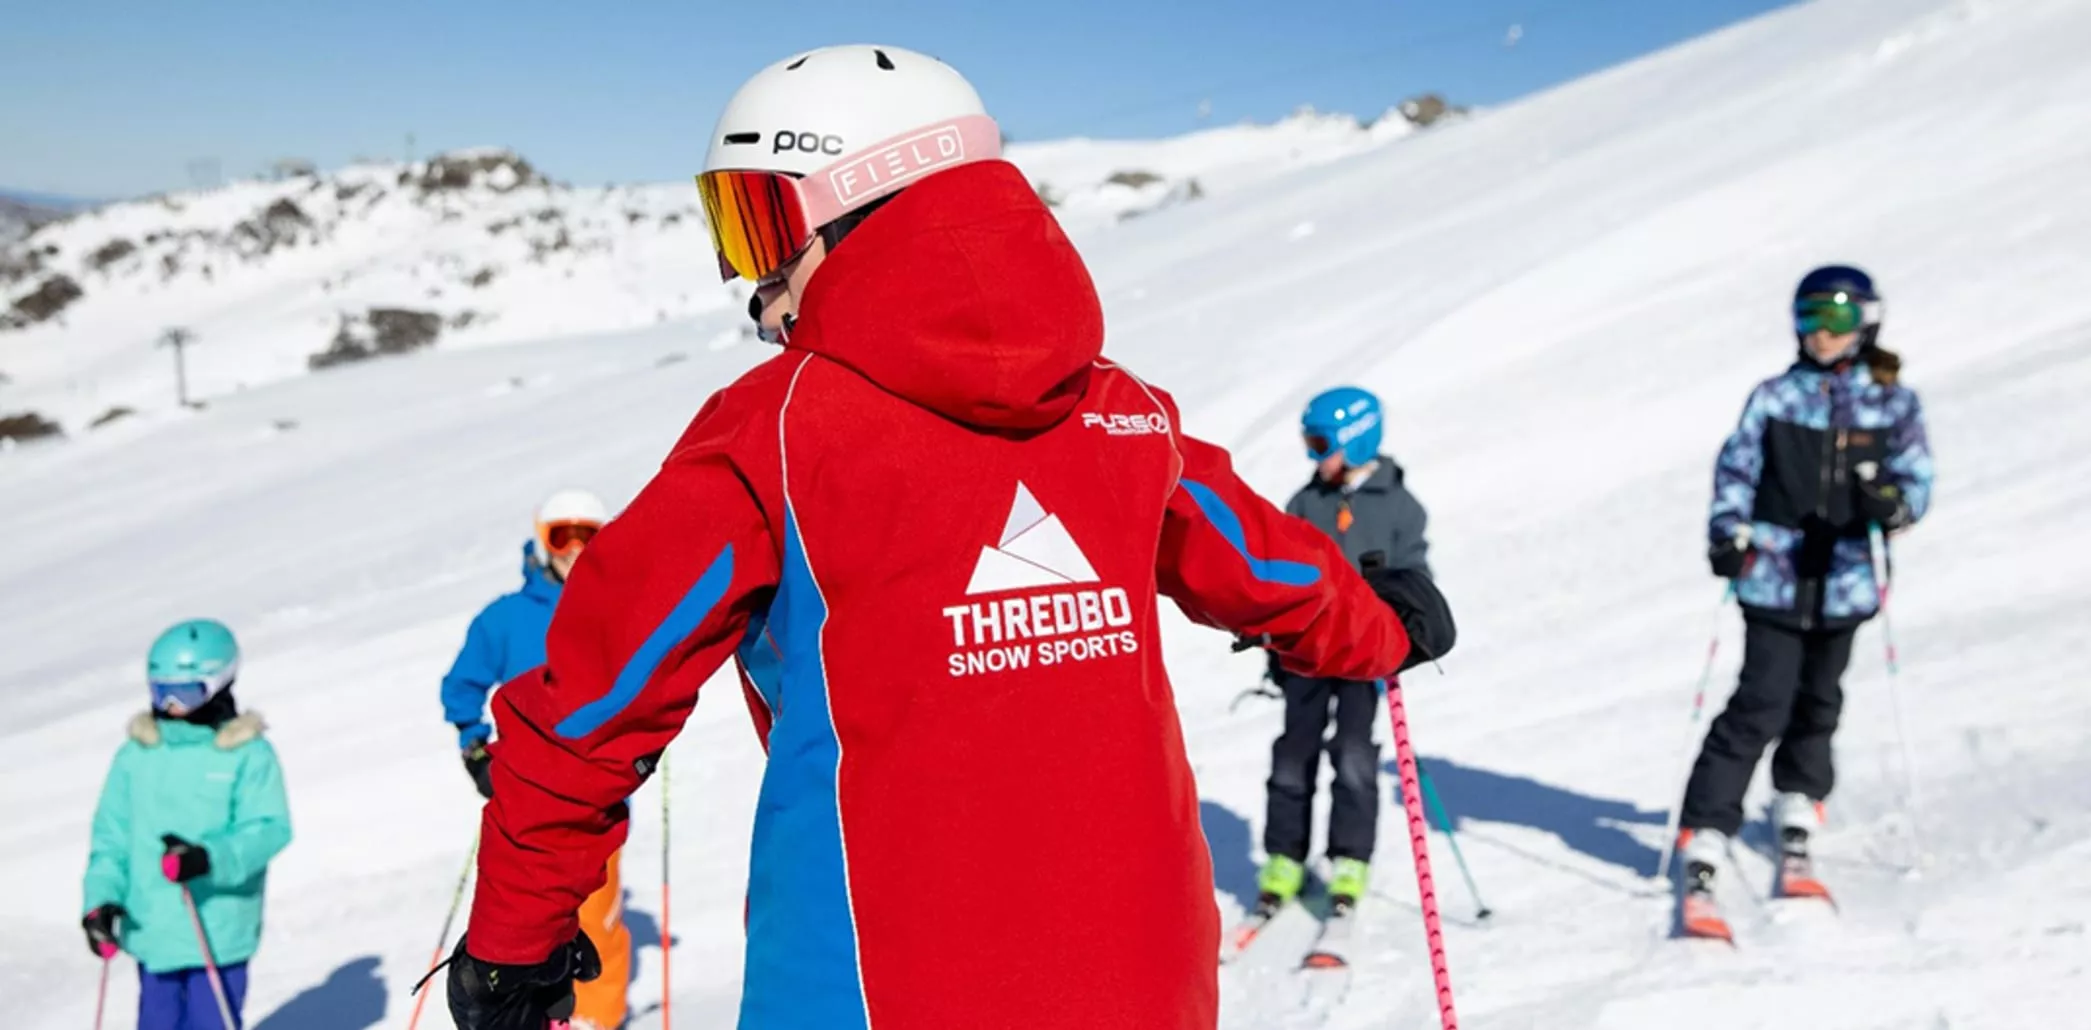 Thredbo Snow Sports School in Australia, Australia and Oceania | Snowboarding,Skiing - Rated 0.8